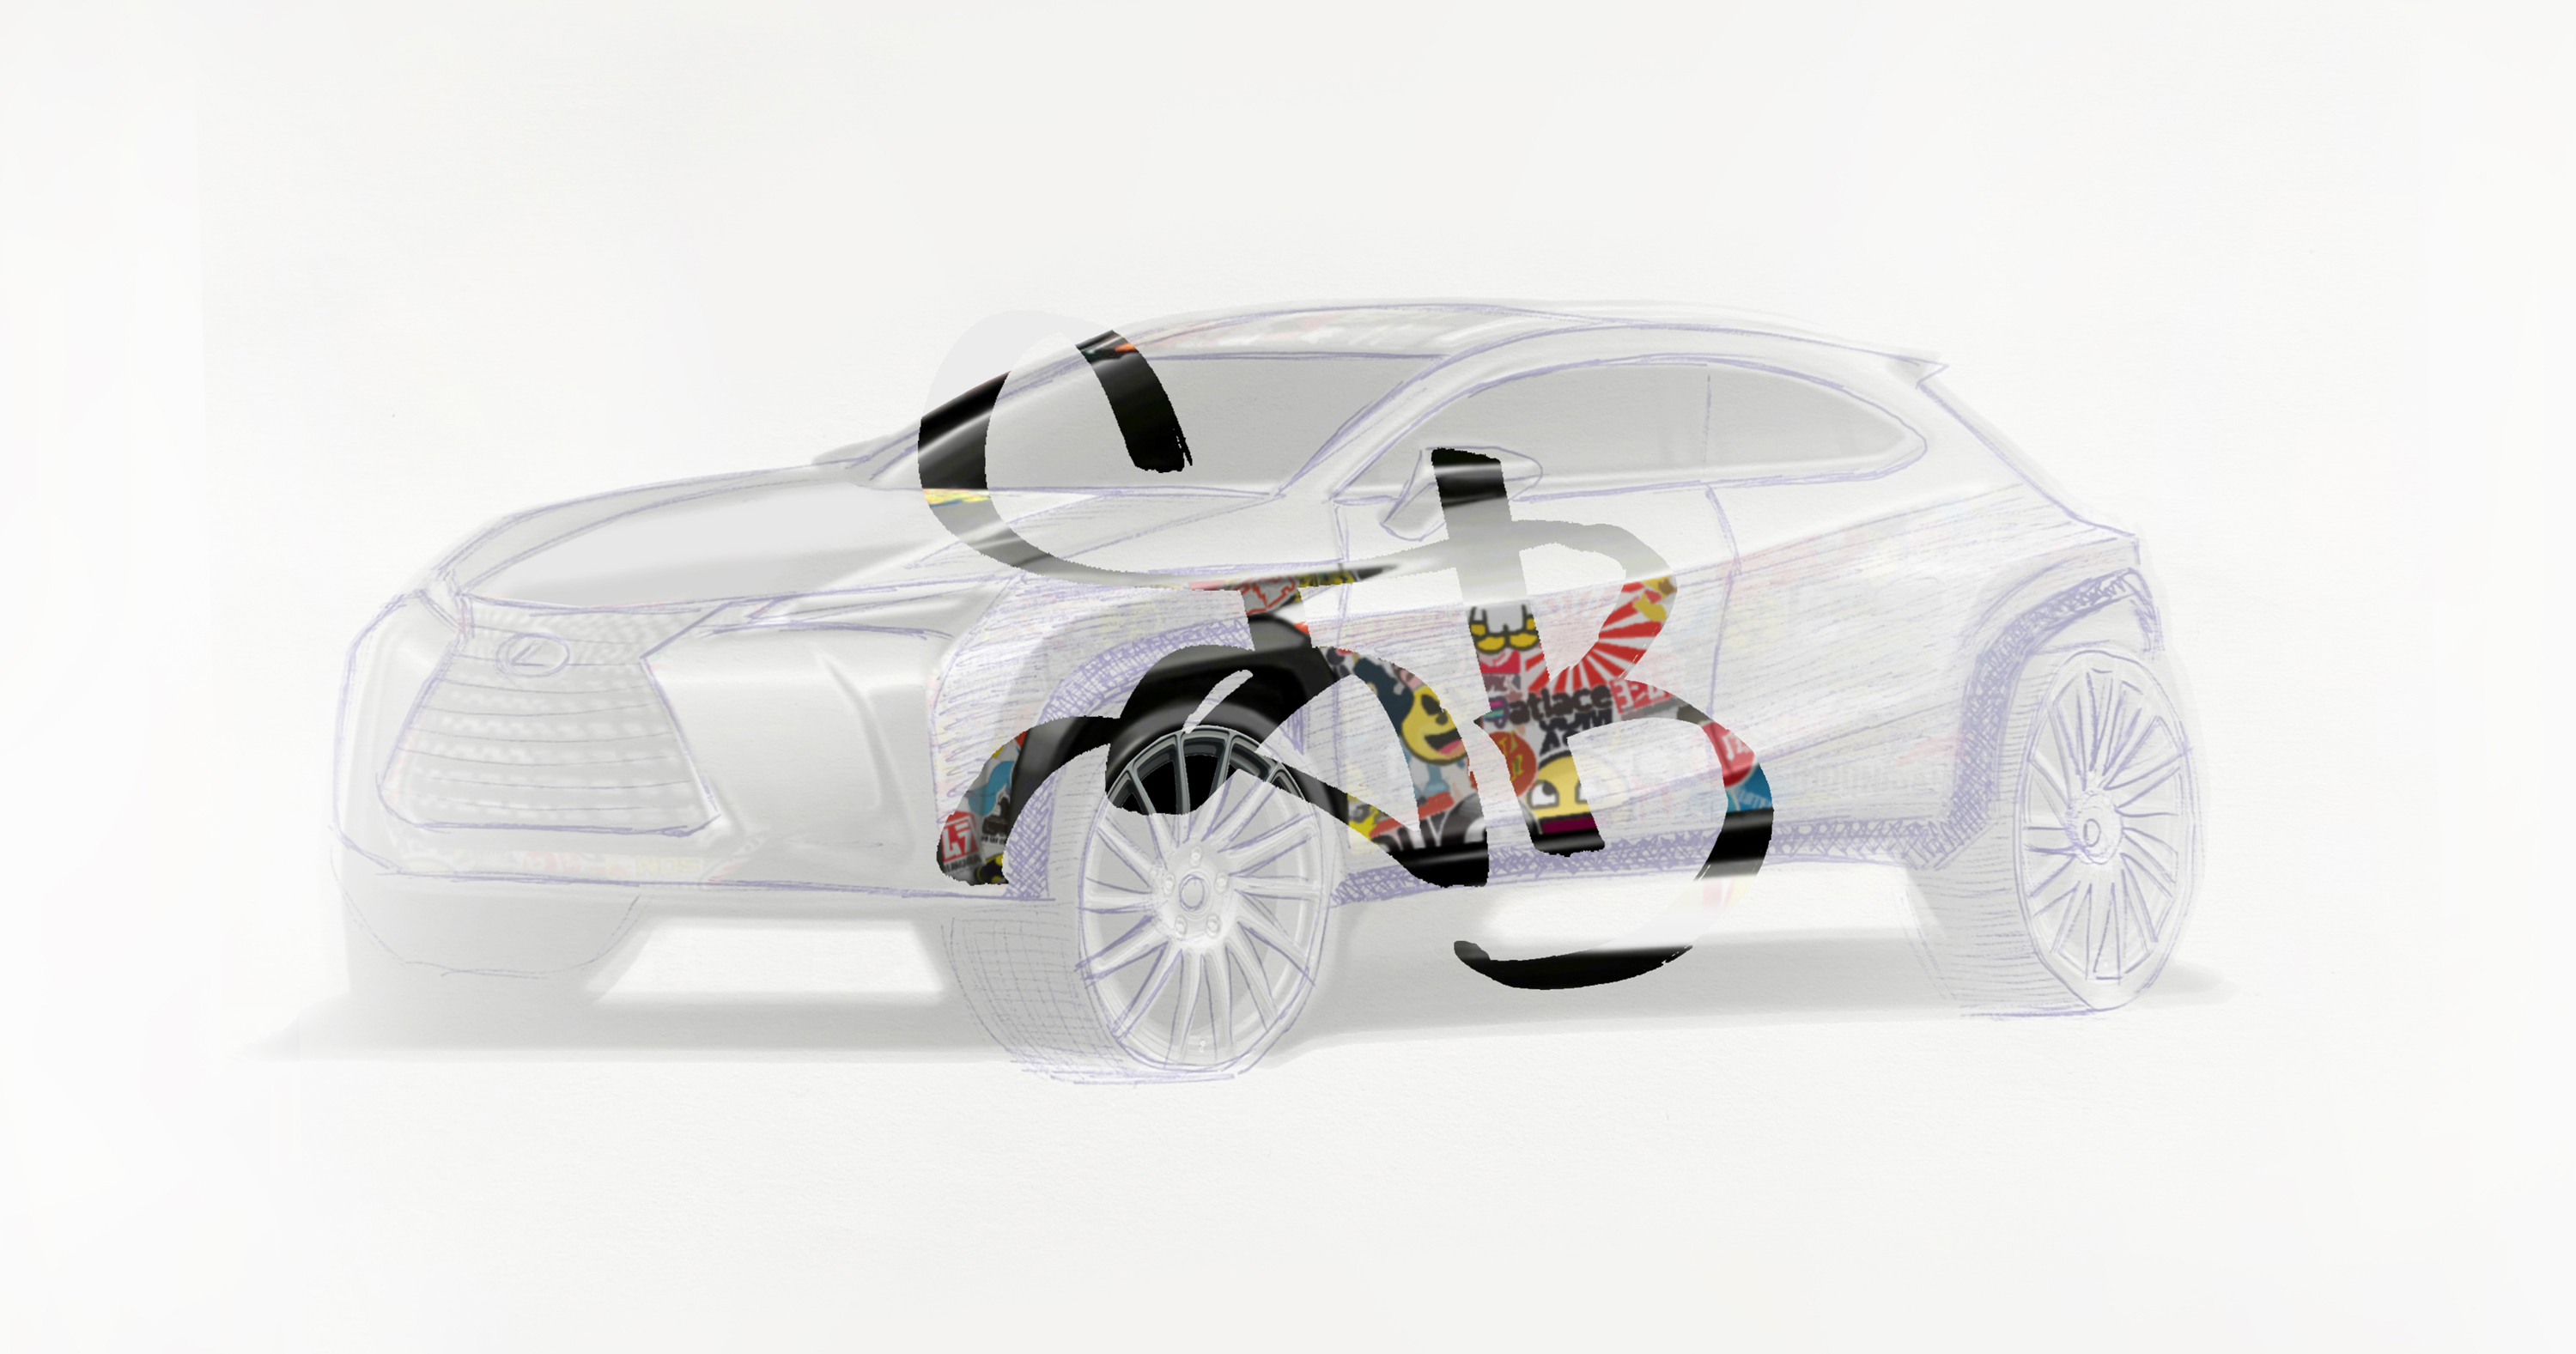 Lexus trabaja ya en su próximo ‘bombazo’ artístico